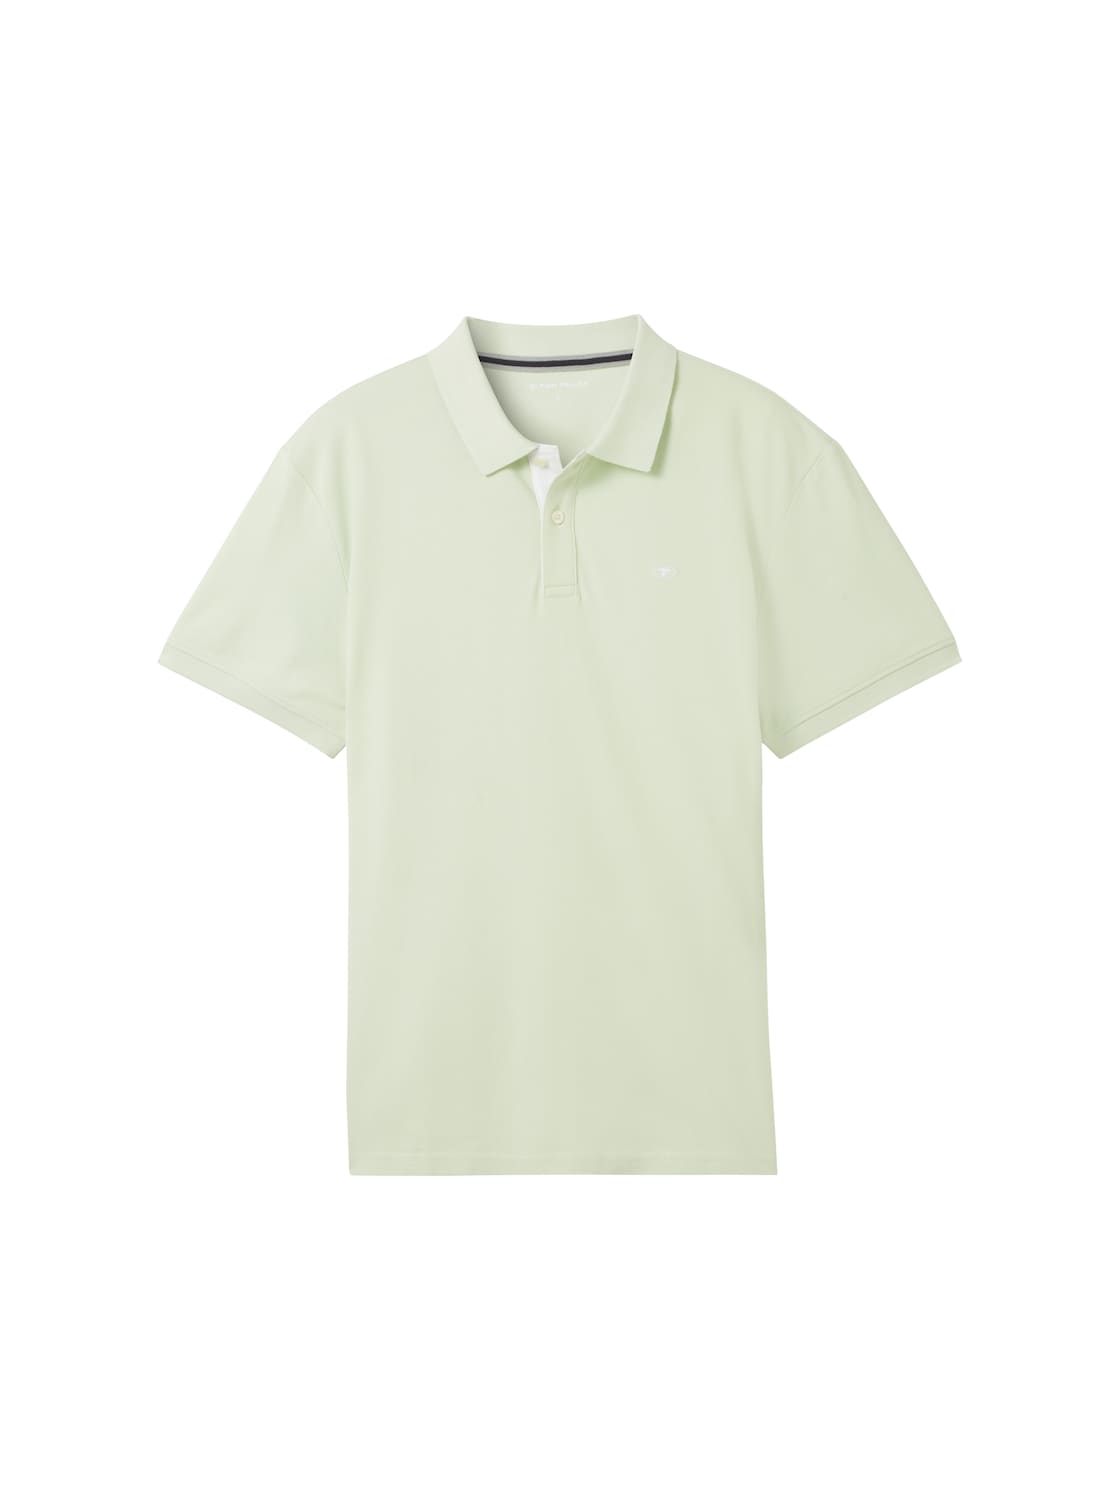 TOM TAILOR Herren Basic Polo Shirt, grün, Uni, Gr. L von Tom Tailor